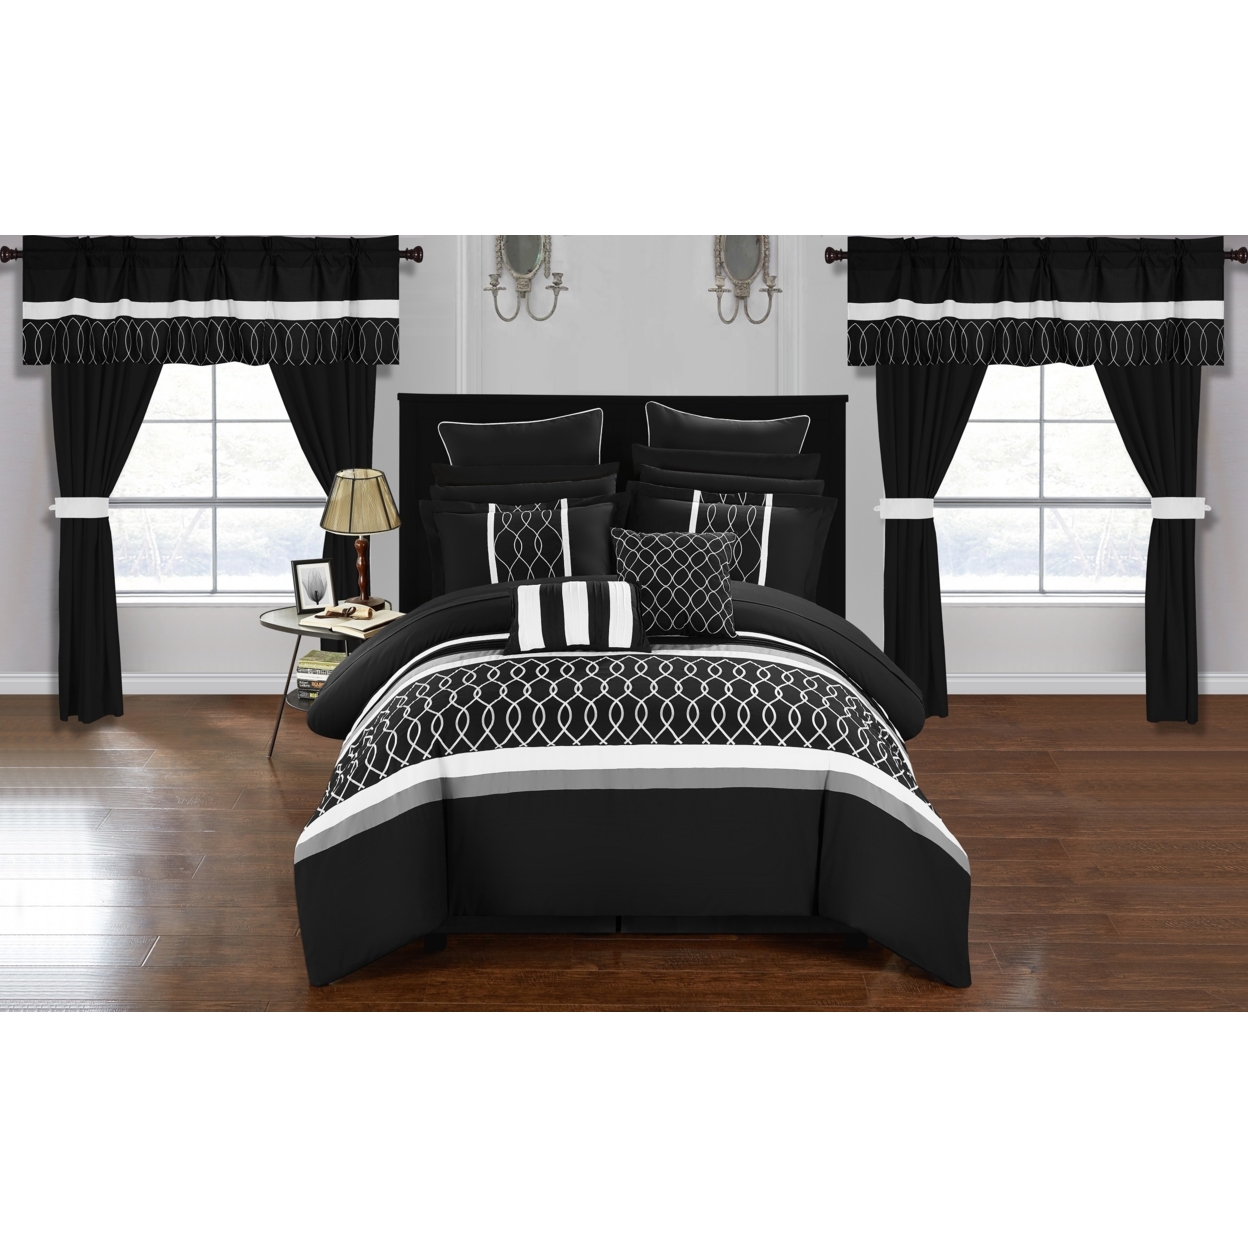 Topaz 24 Piece Comforter Bed In A Bag Pleated Ruffled Designer Embellished Bedding Set - Navy, Queen